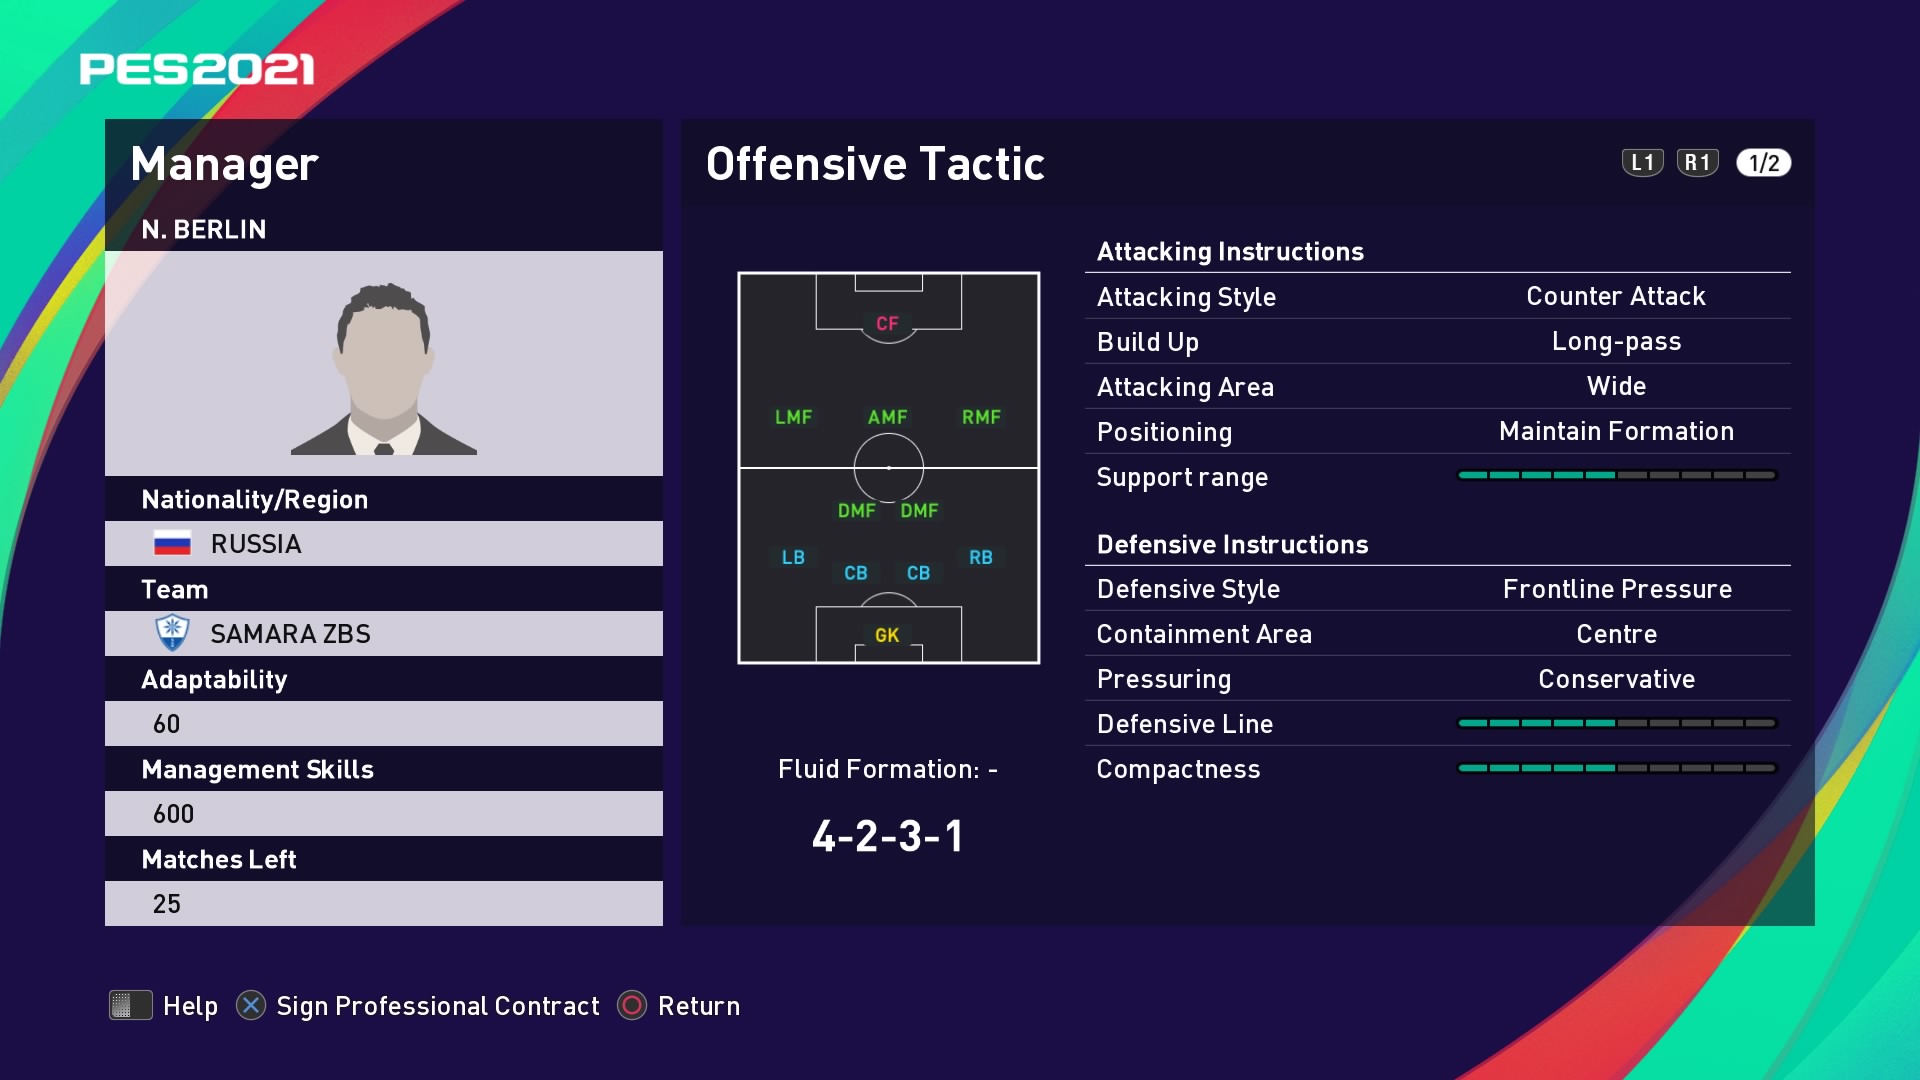 N. Berlin ( Igor Osinkin) Offensive Tactic in PES 2021 myClub